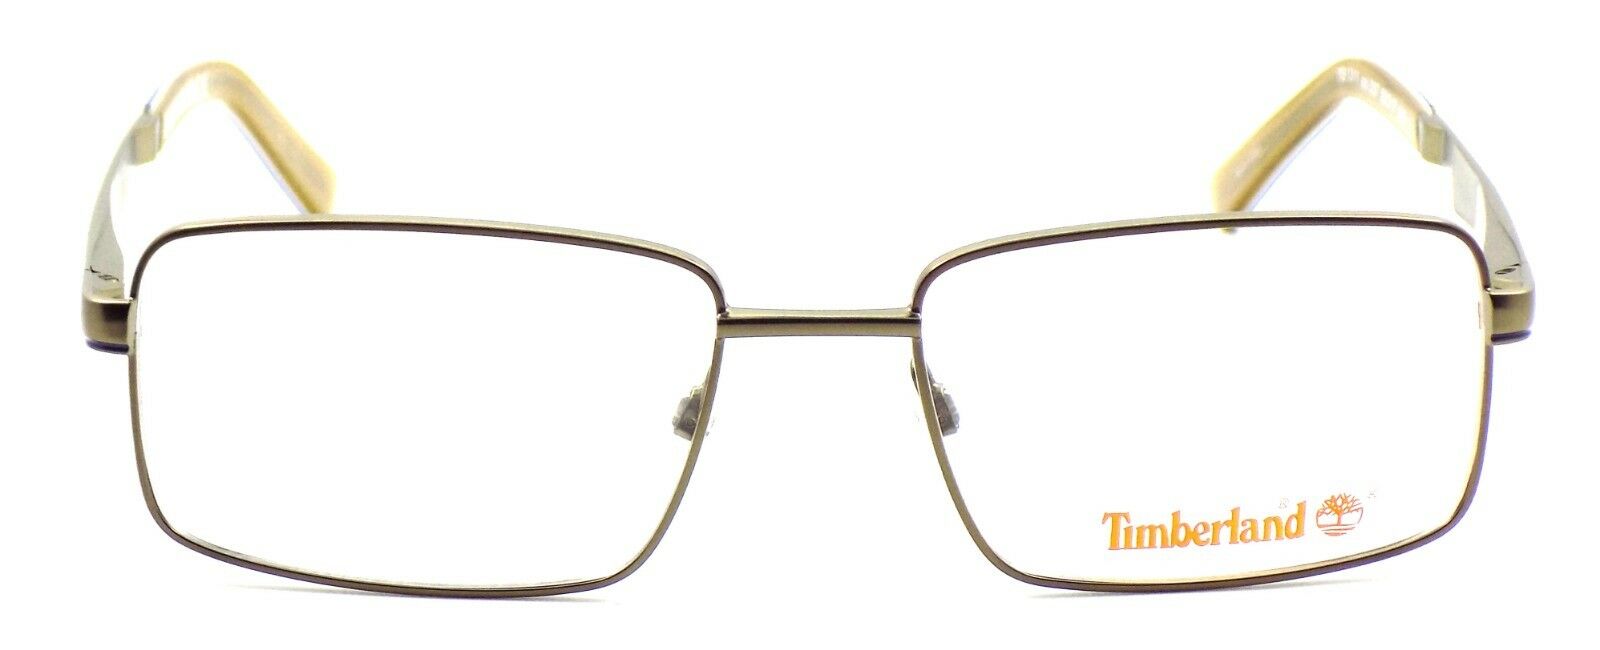 2-TIMBERLAND TB1311 037 Men's Eyeglasses Frames 53-17-140 Matte Dark Bronze + CASE-664689682720-IKSpecs